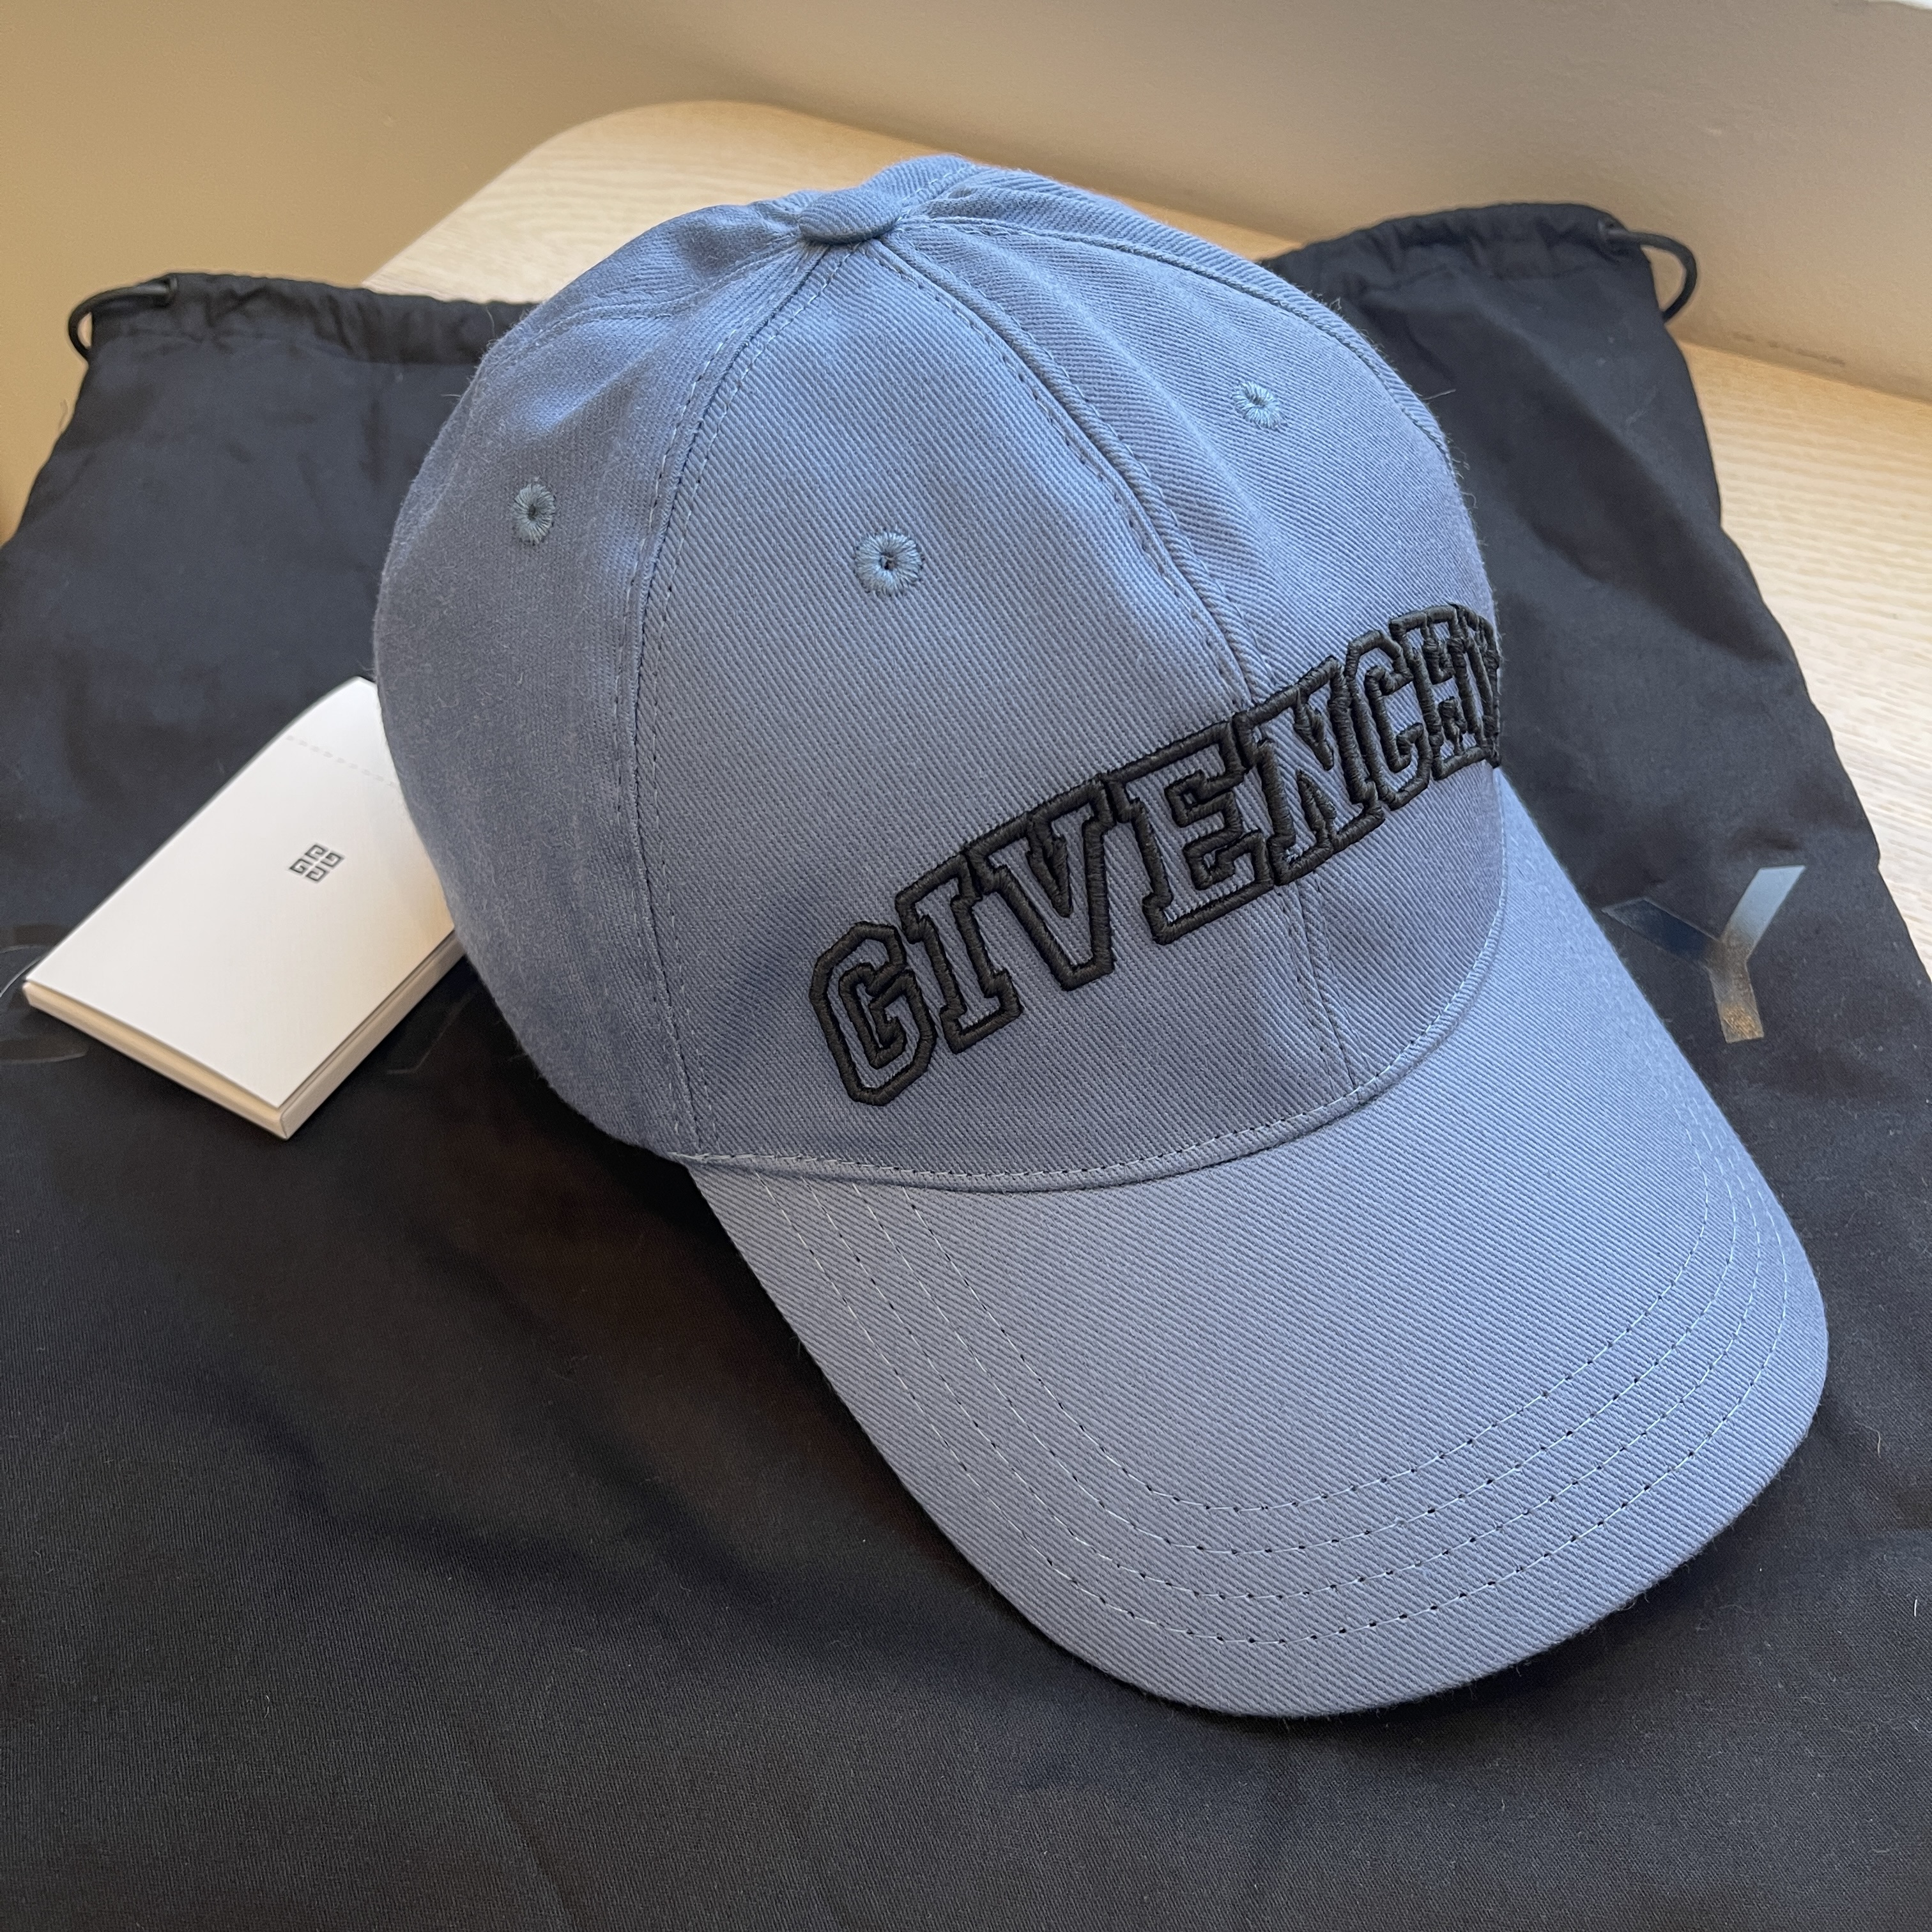 Givenchy Logo Baseball Cap